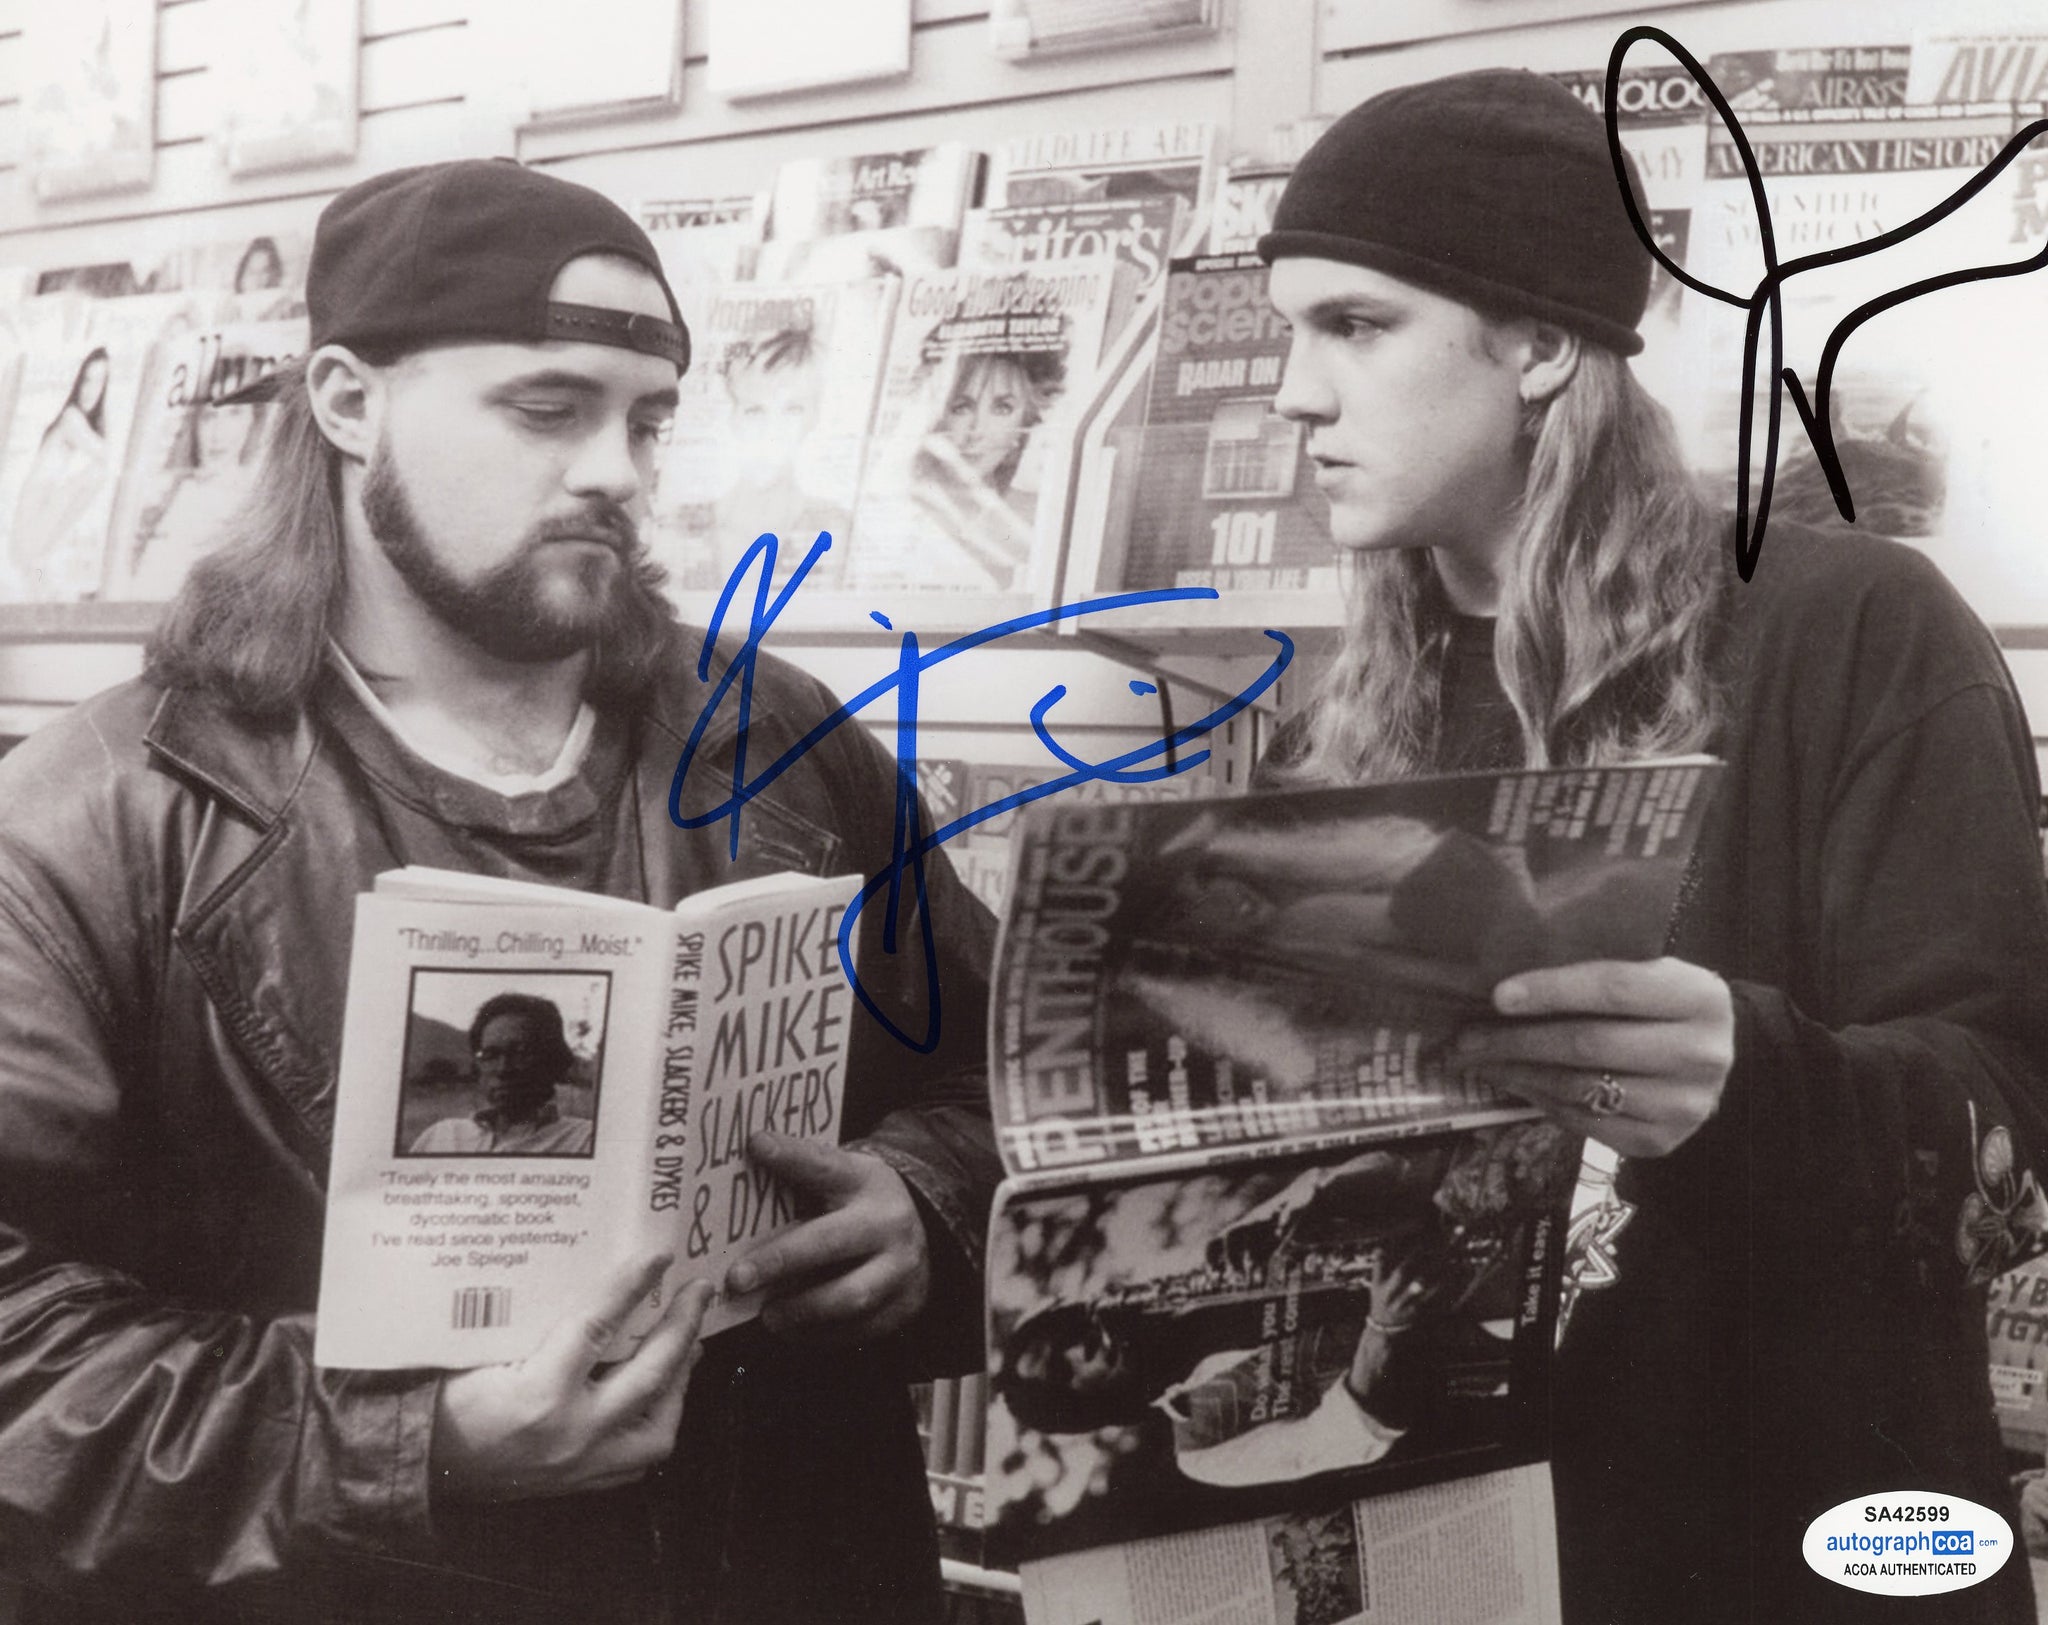 Kevin Smith & Jason Mewes Jay and Silent Bob Signed Autograph 8x10 Photo ACOA #4